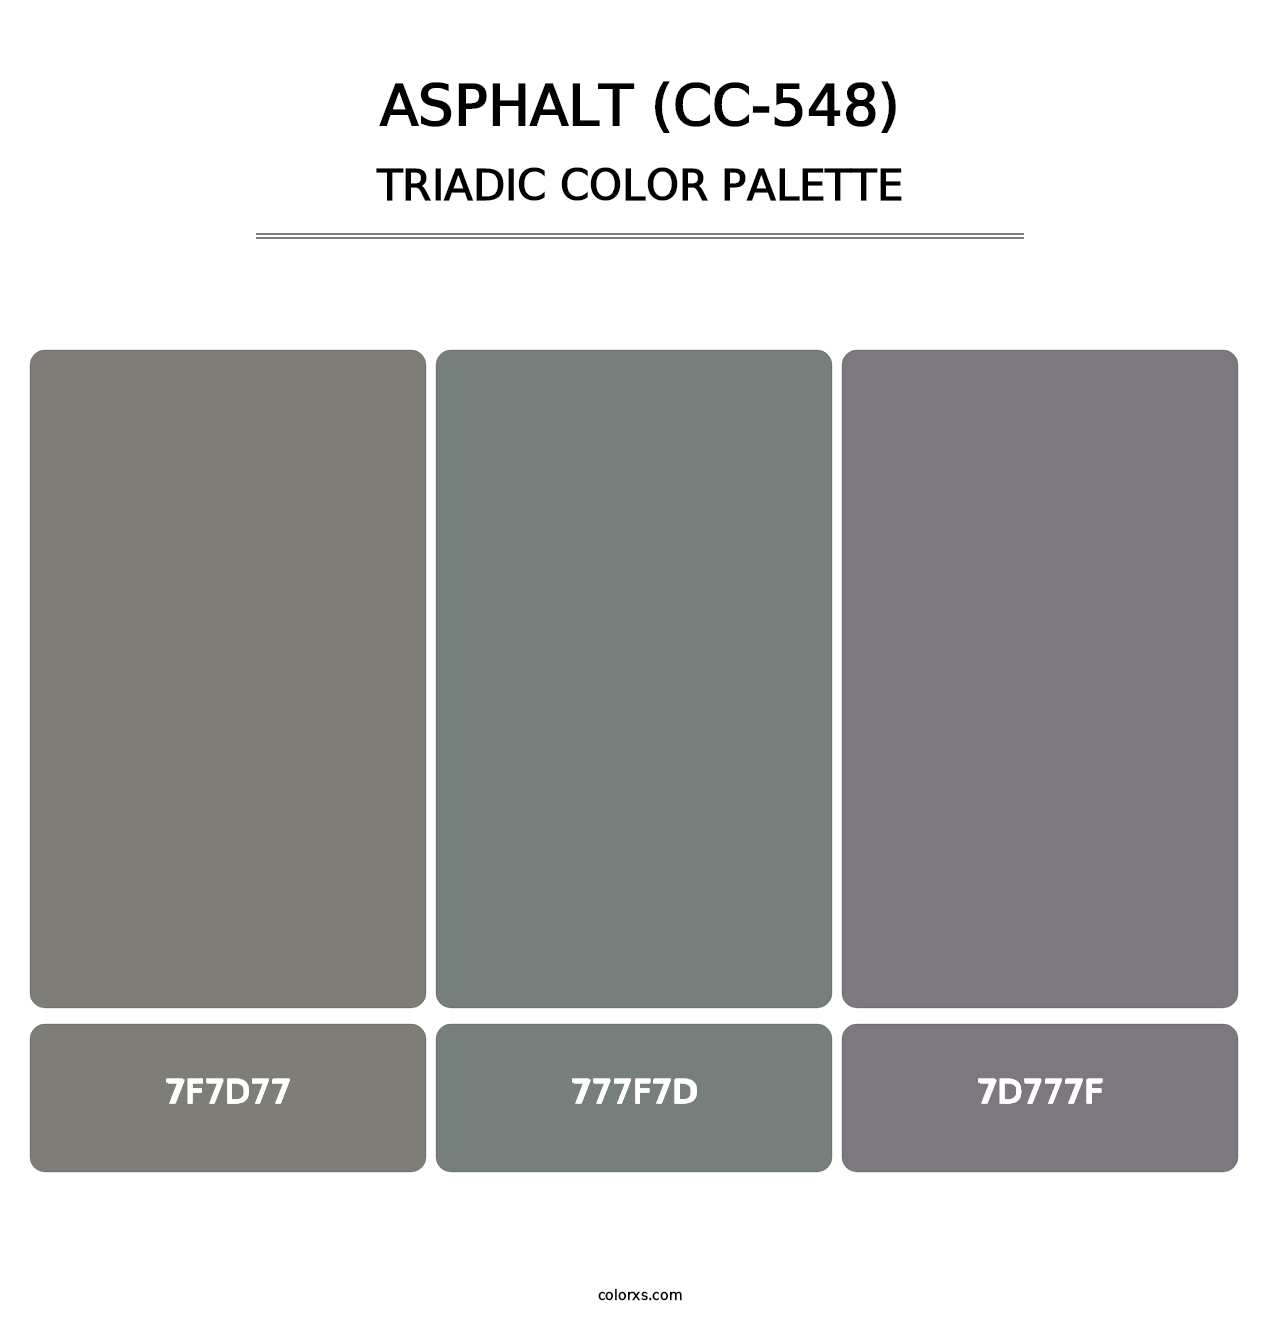 Asphalt (CC-548) - Triadic Color Palette